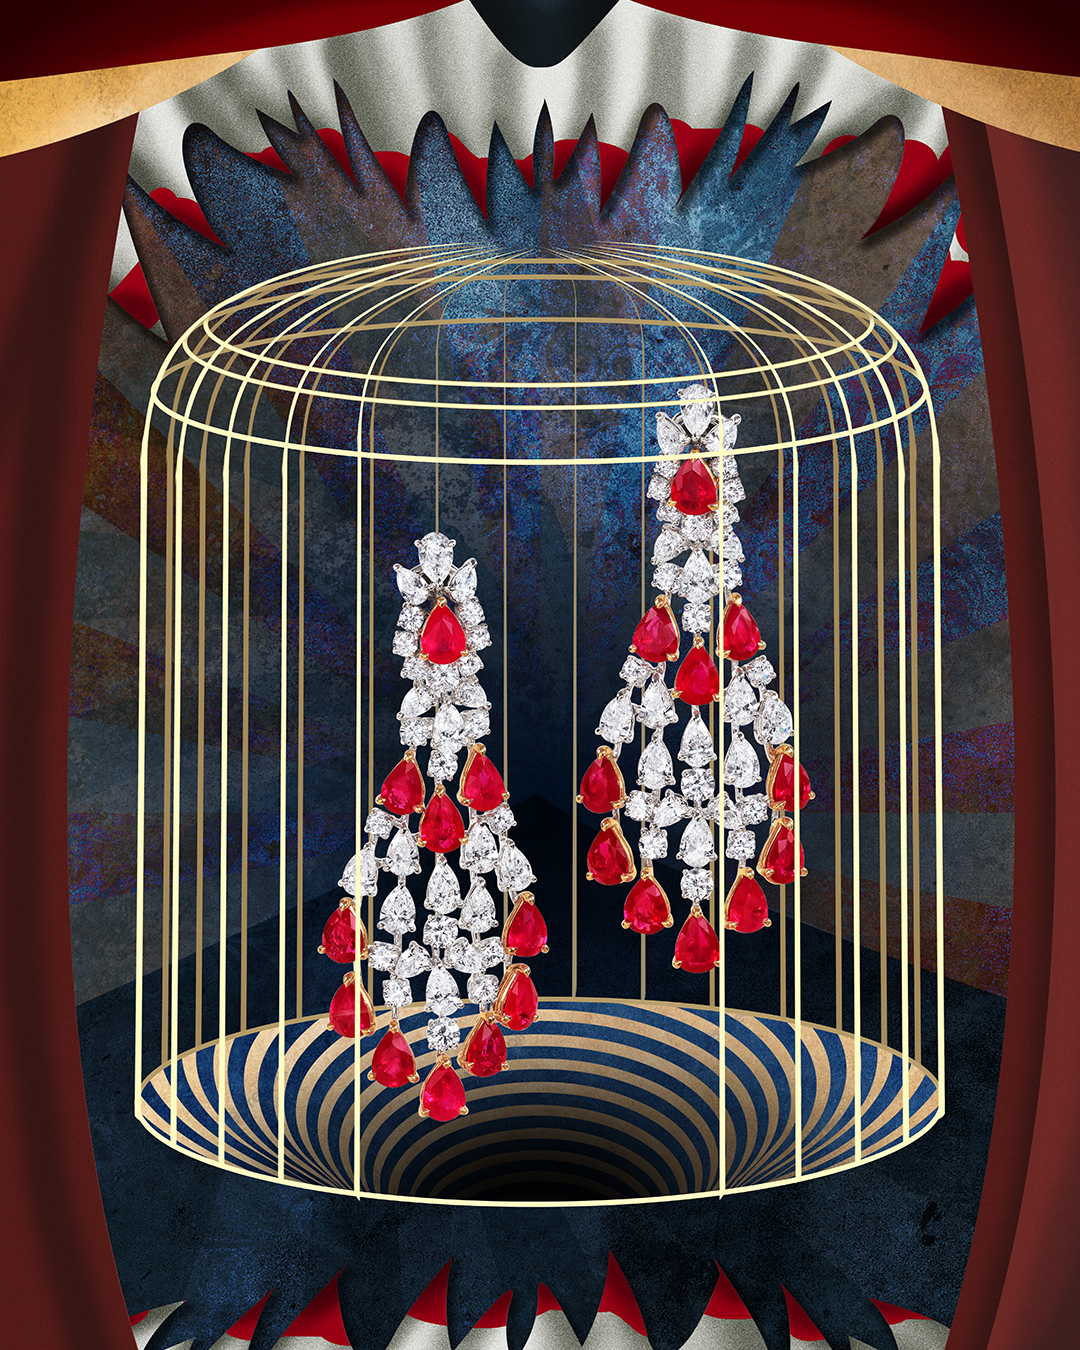 celia fabbri photography illustration high jewellery chatila rubis and diamonds earrings